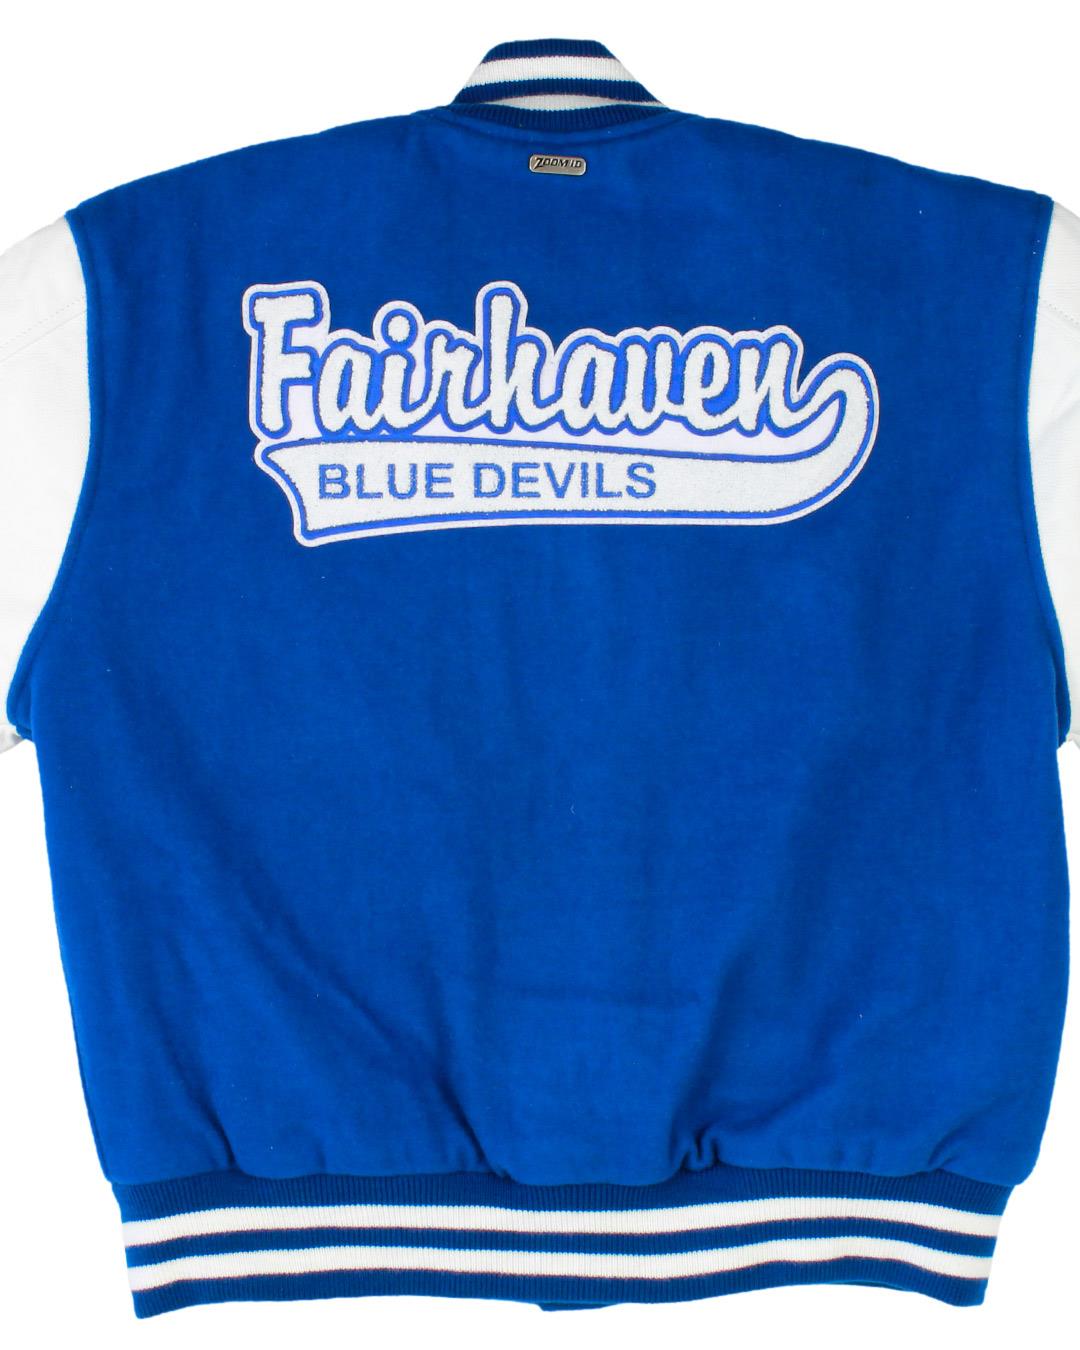 Fairhaven High School Letterman Jacket, Fairhaven MA - Back 3